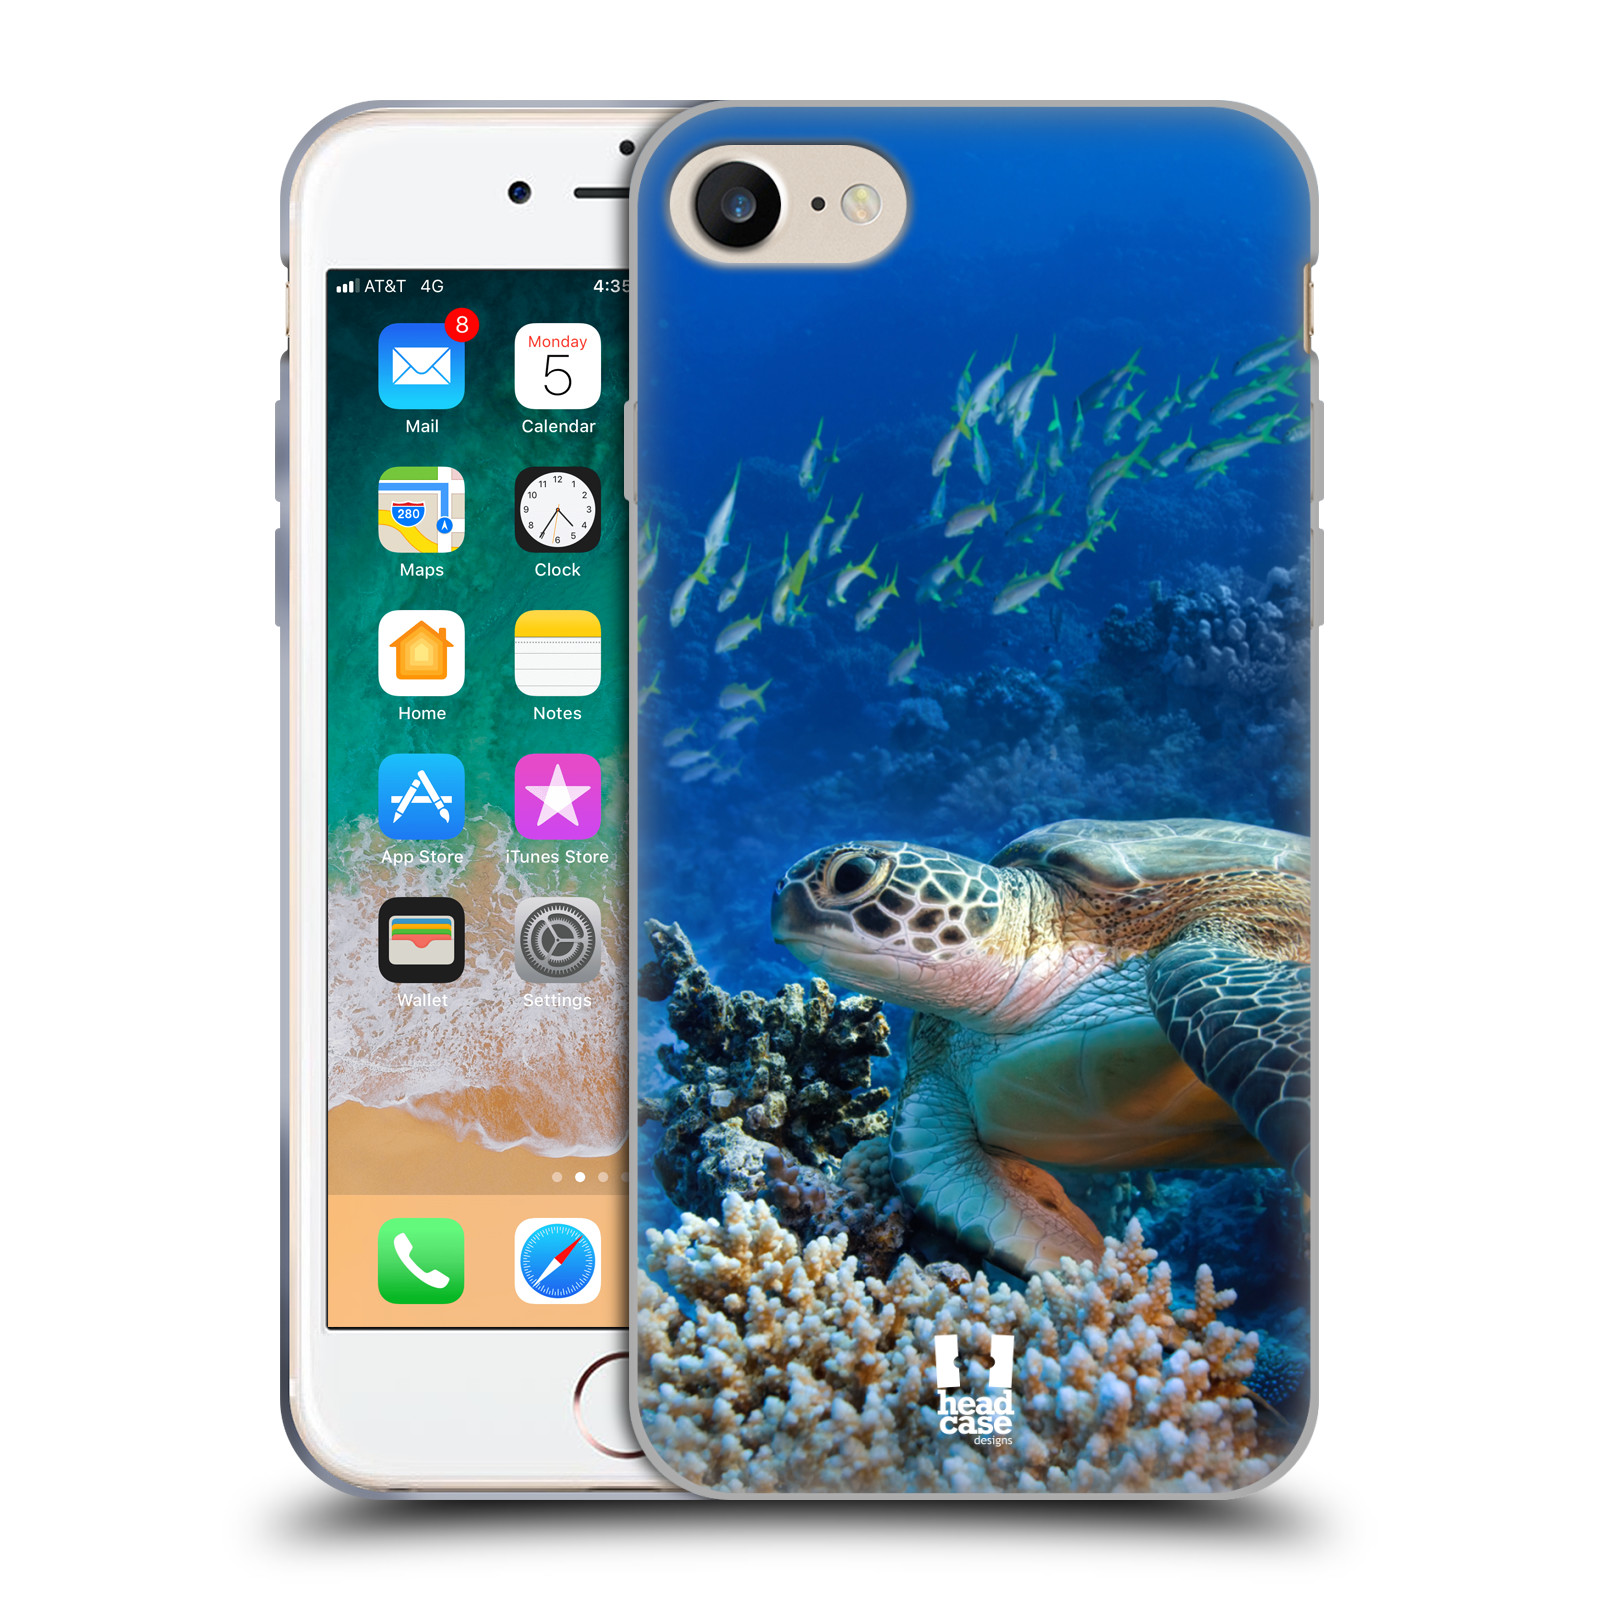 HEAD CASE silikonový obal na mobil Apple Iphone 7 vzor Divočina, Divoký život a zvířata foto MOŘSKÁ ŽELVA MODRÁ PODMOŘSKÁ HLADINA